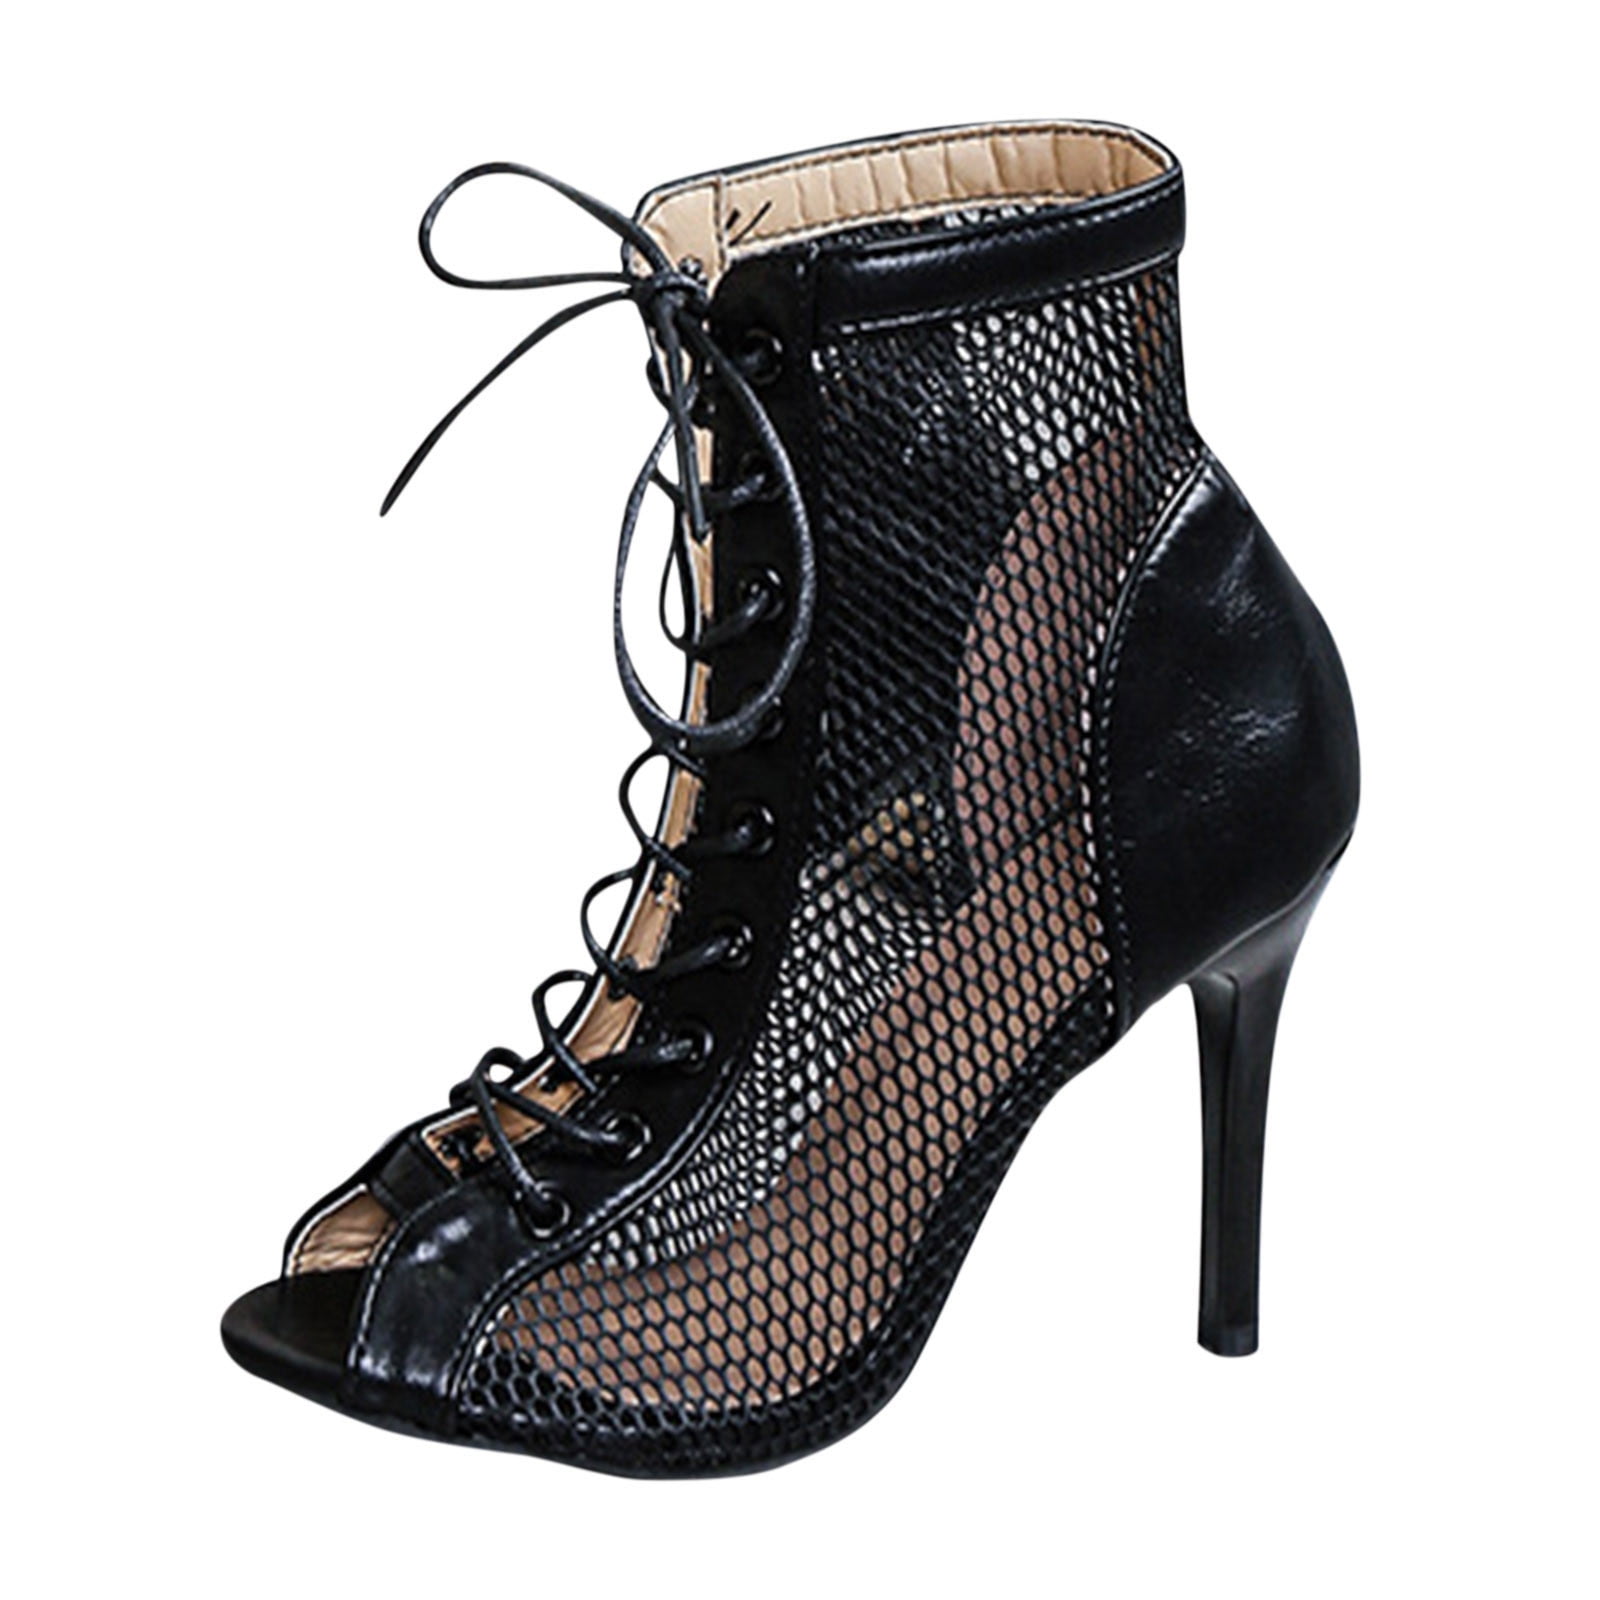 Gladiator heels | Deepika Padukone